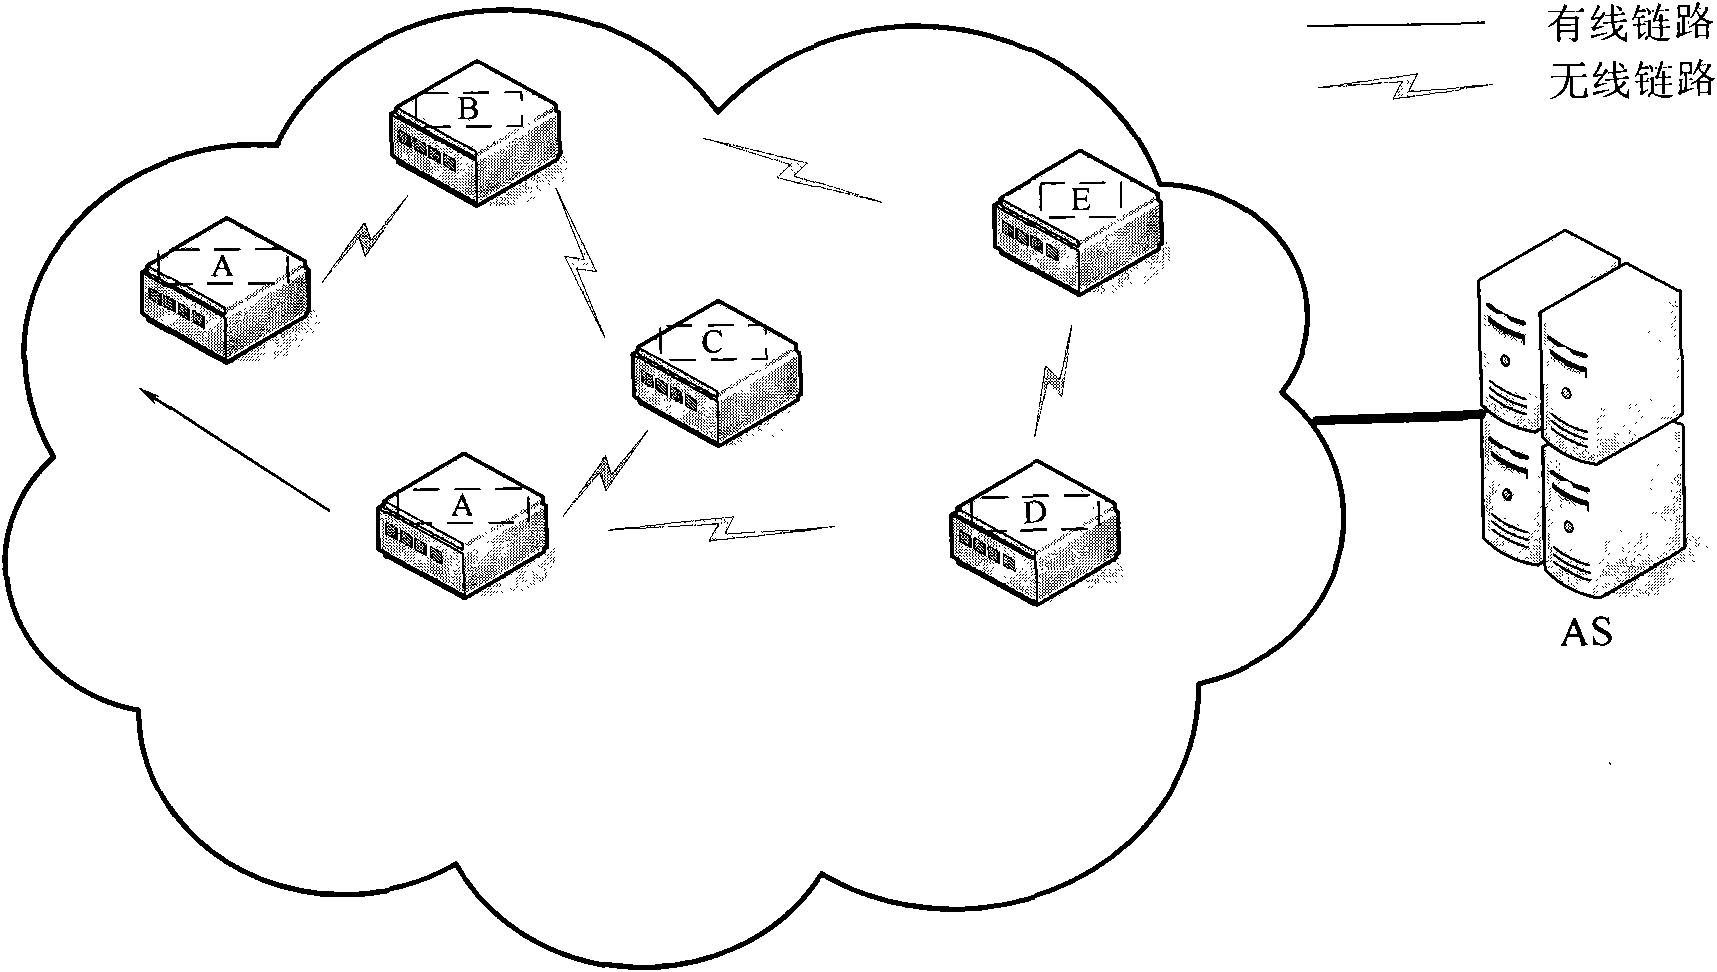 Rapid authentication method for wireless Mesh network backbone node switching